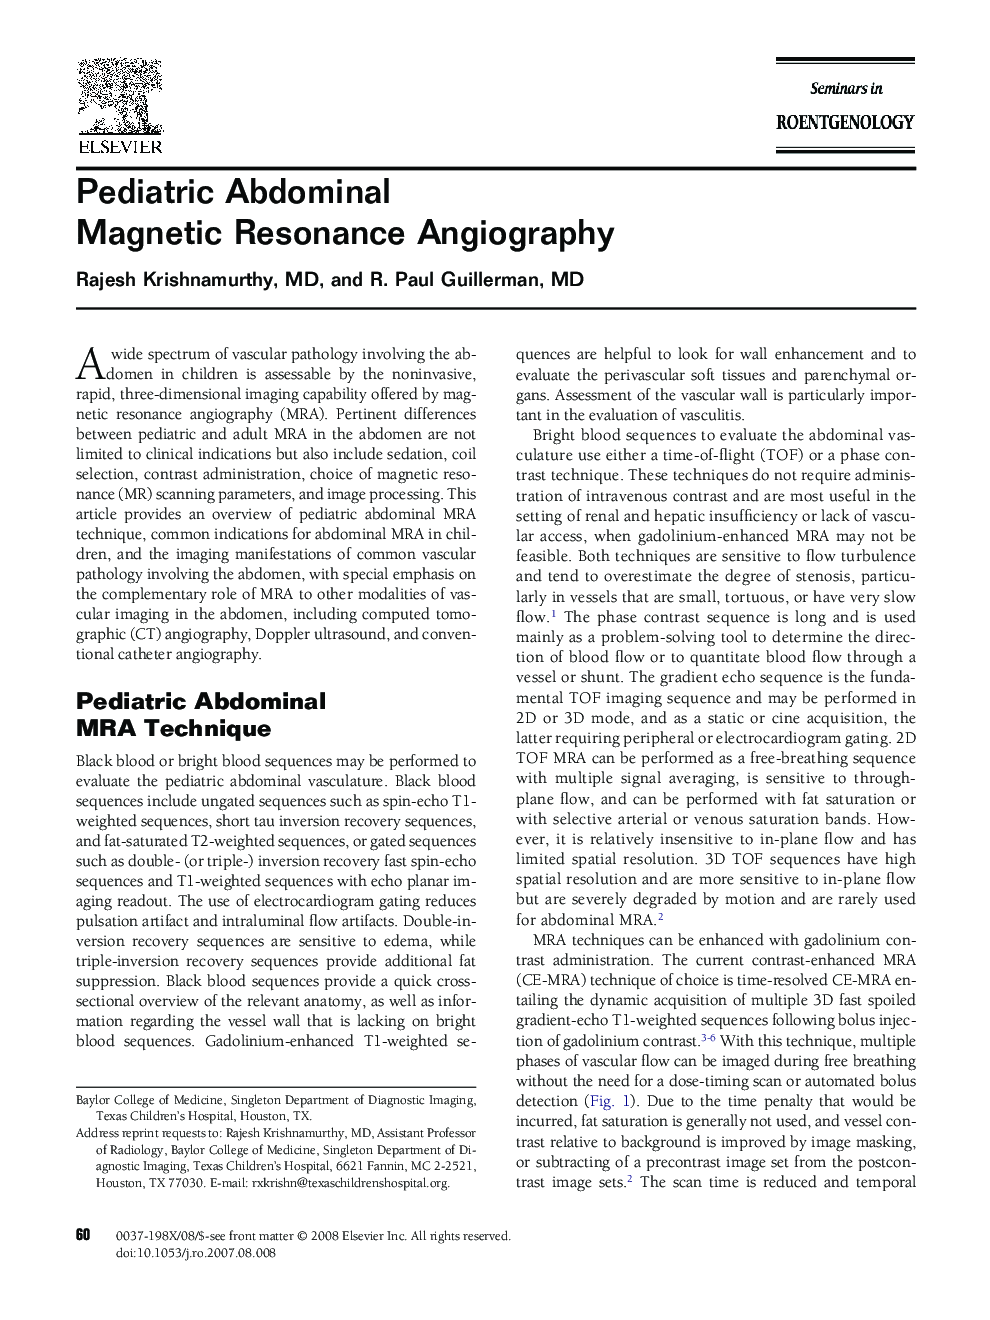 Pediatric Abdominal Magnetic Resonance Angiography